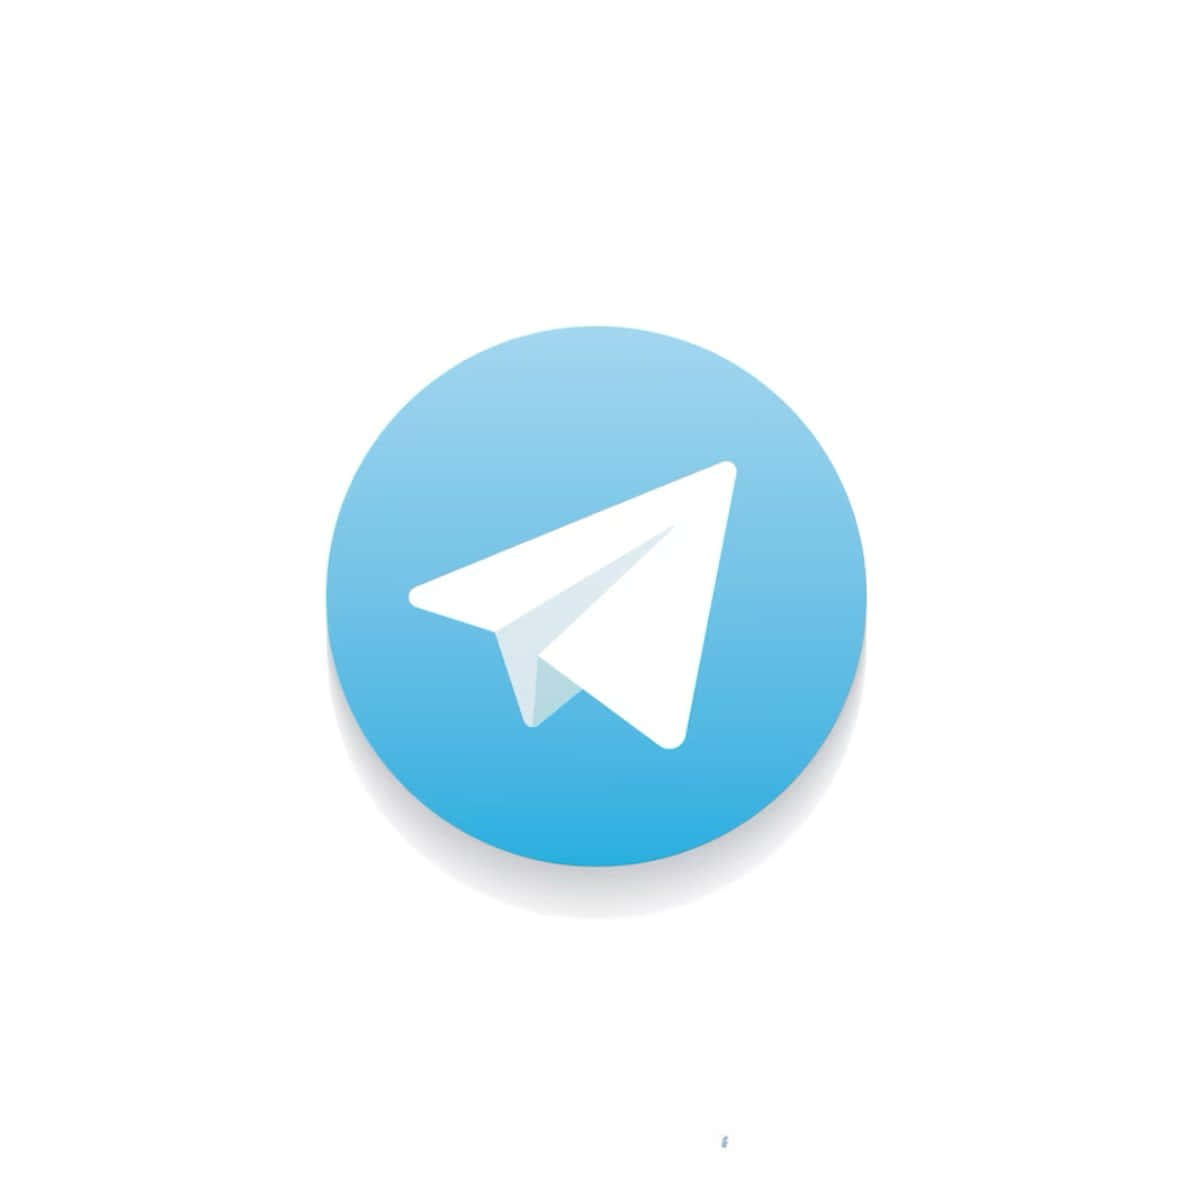 A Blue And White Telegram Logo